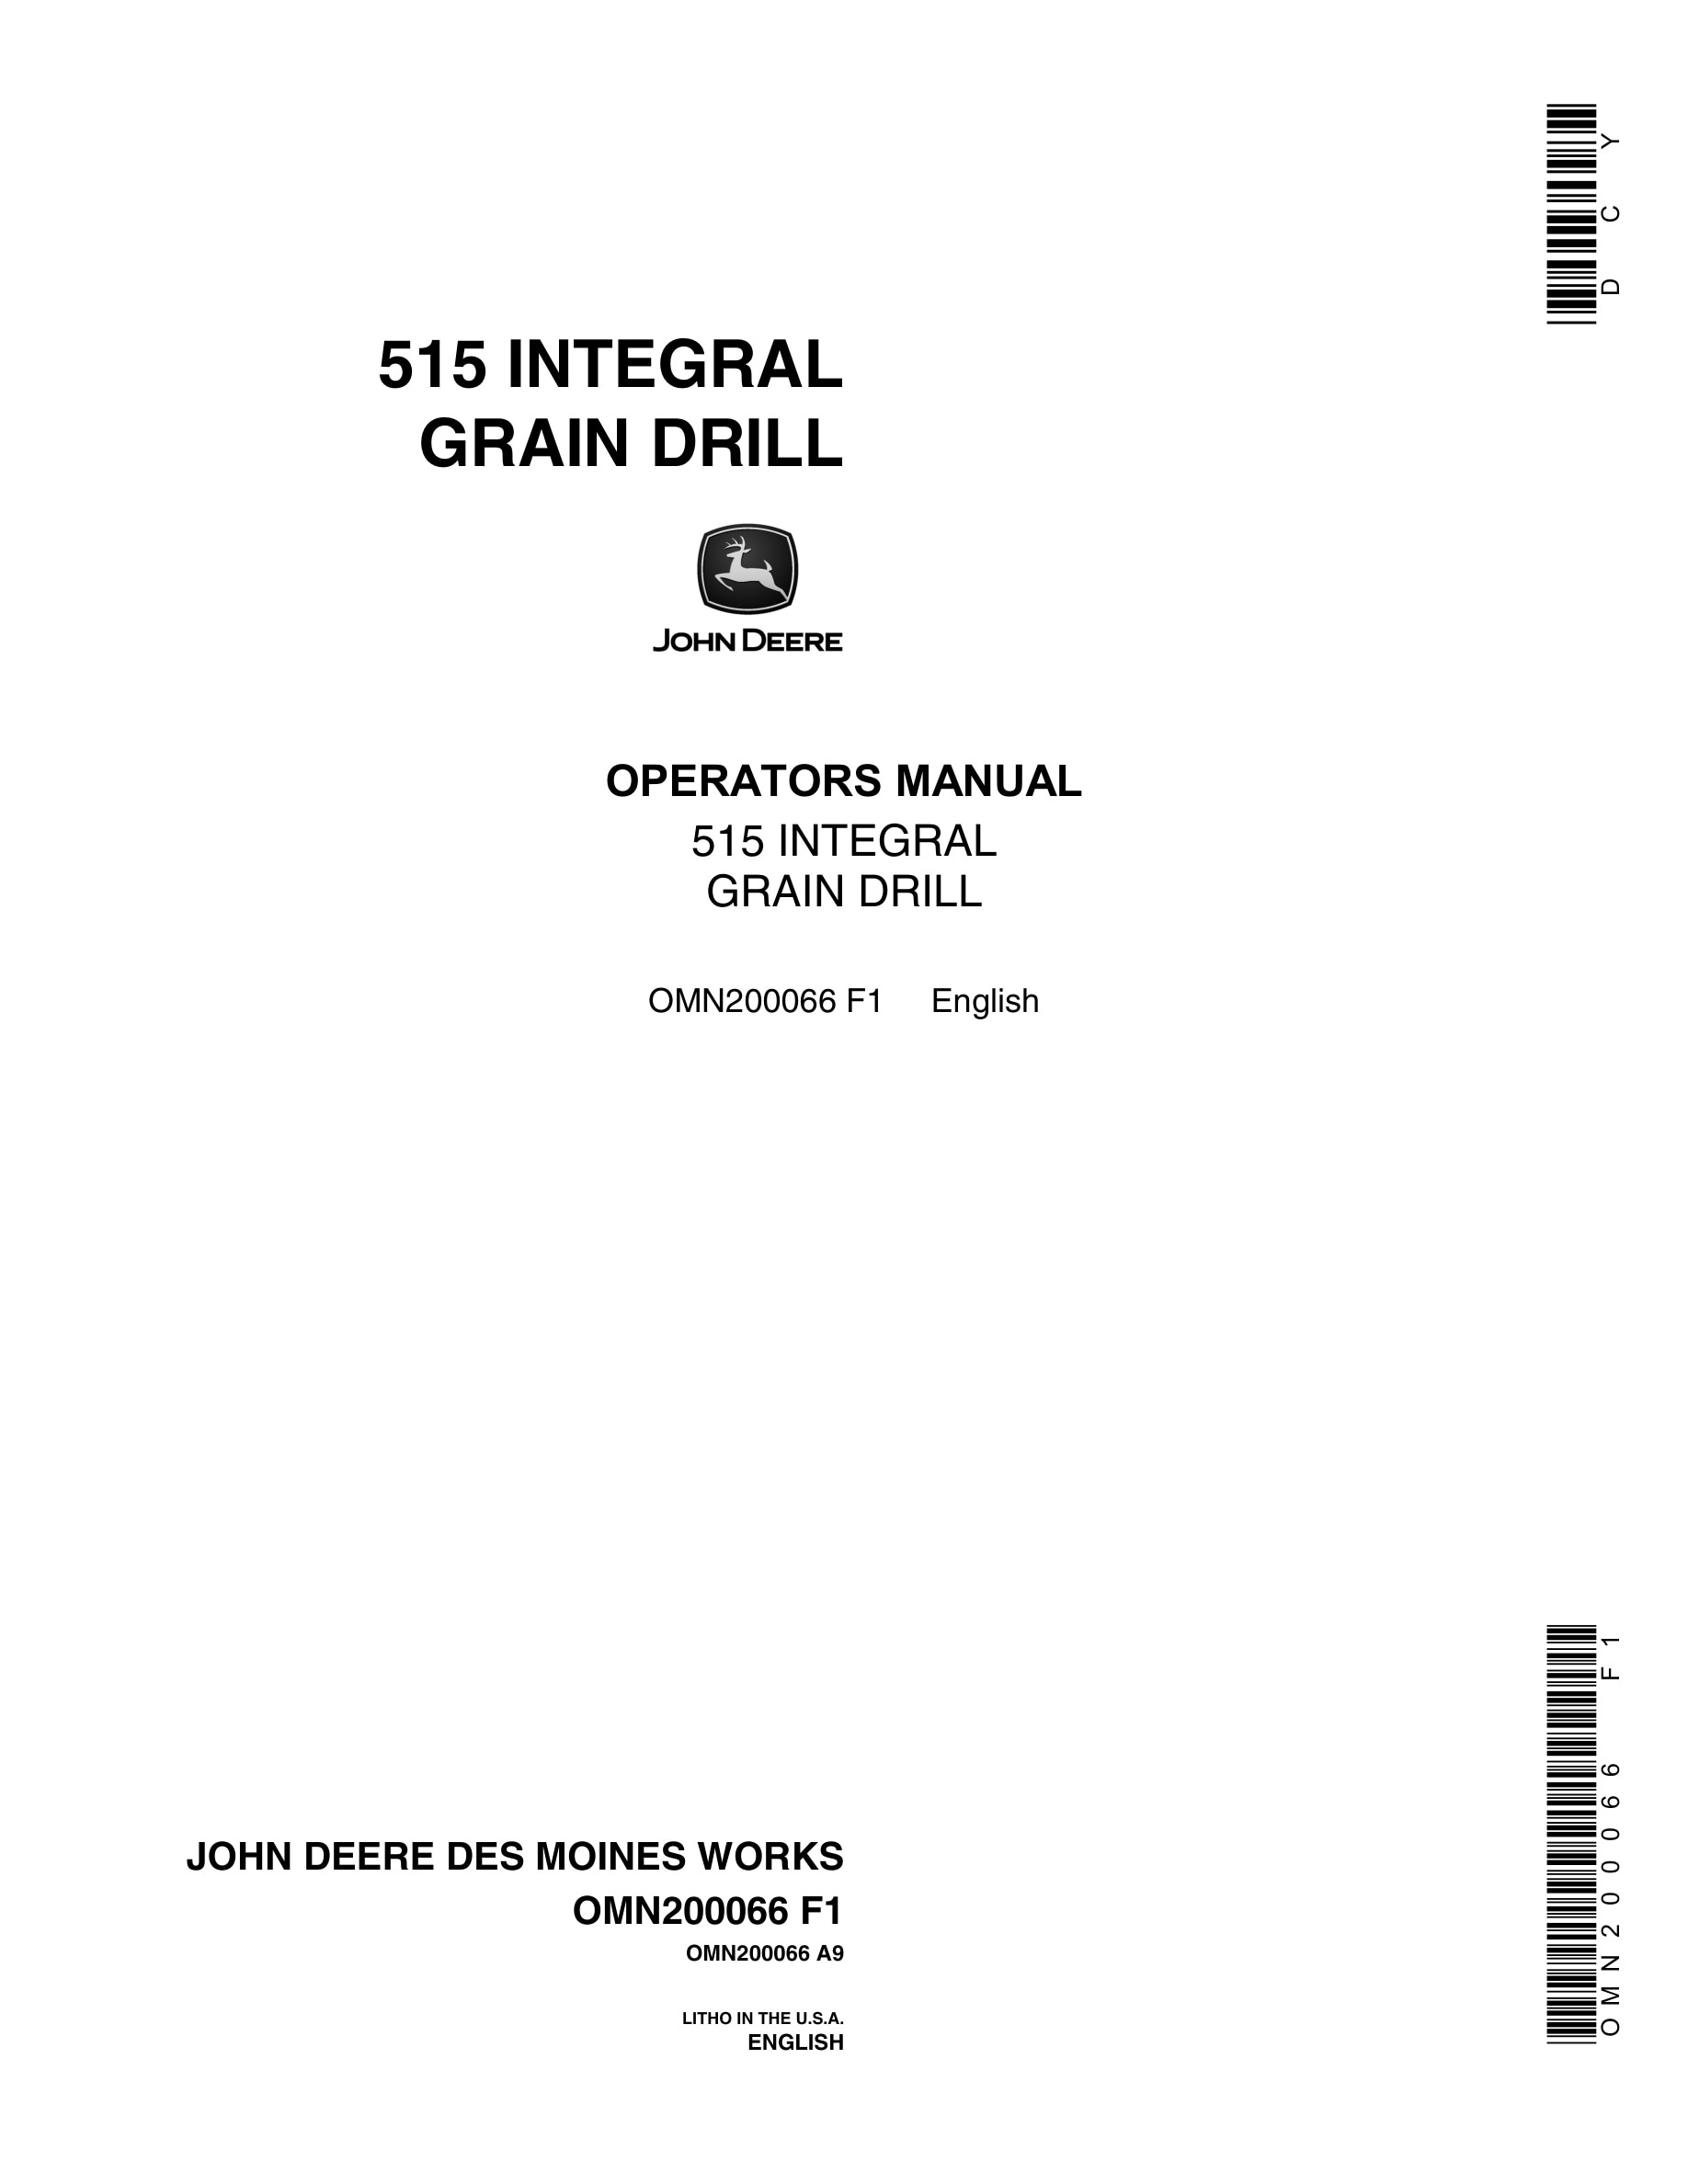 John Deere 515 INTEGRAL GRAIN DRILL Operator Manual OMN200066-1